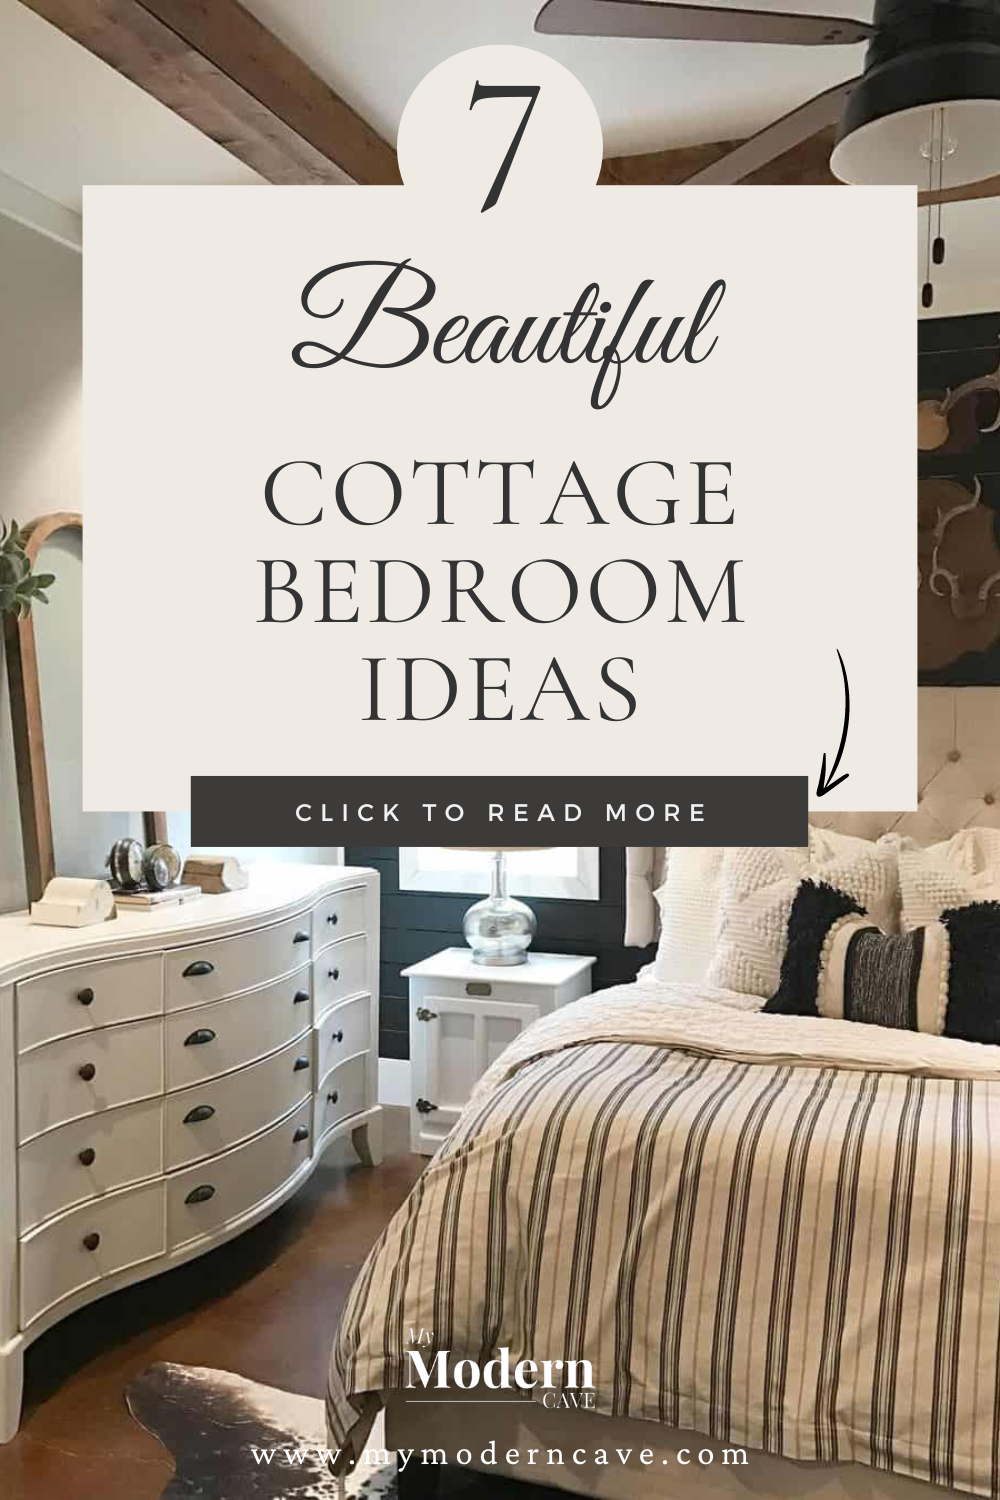 Cottage Bedroom Ideas Infographic